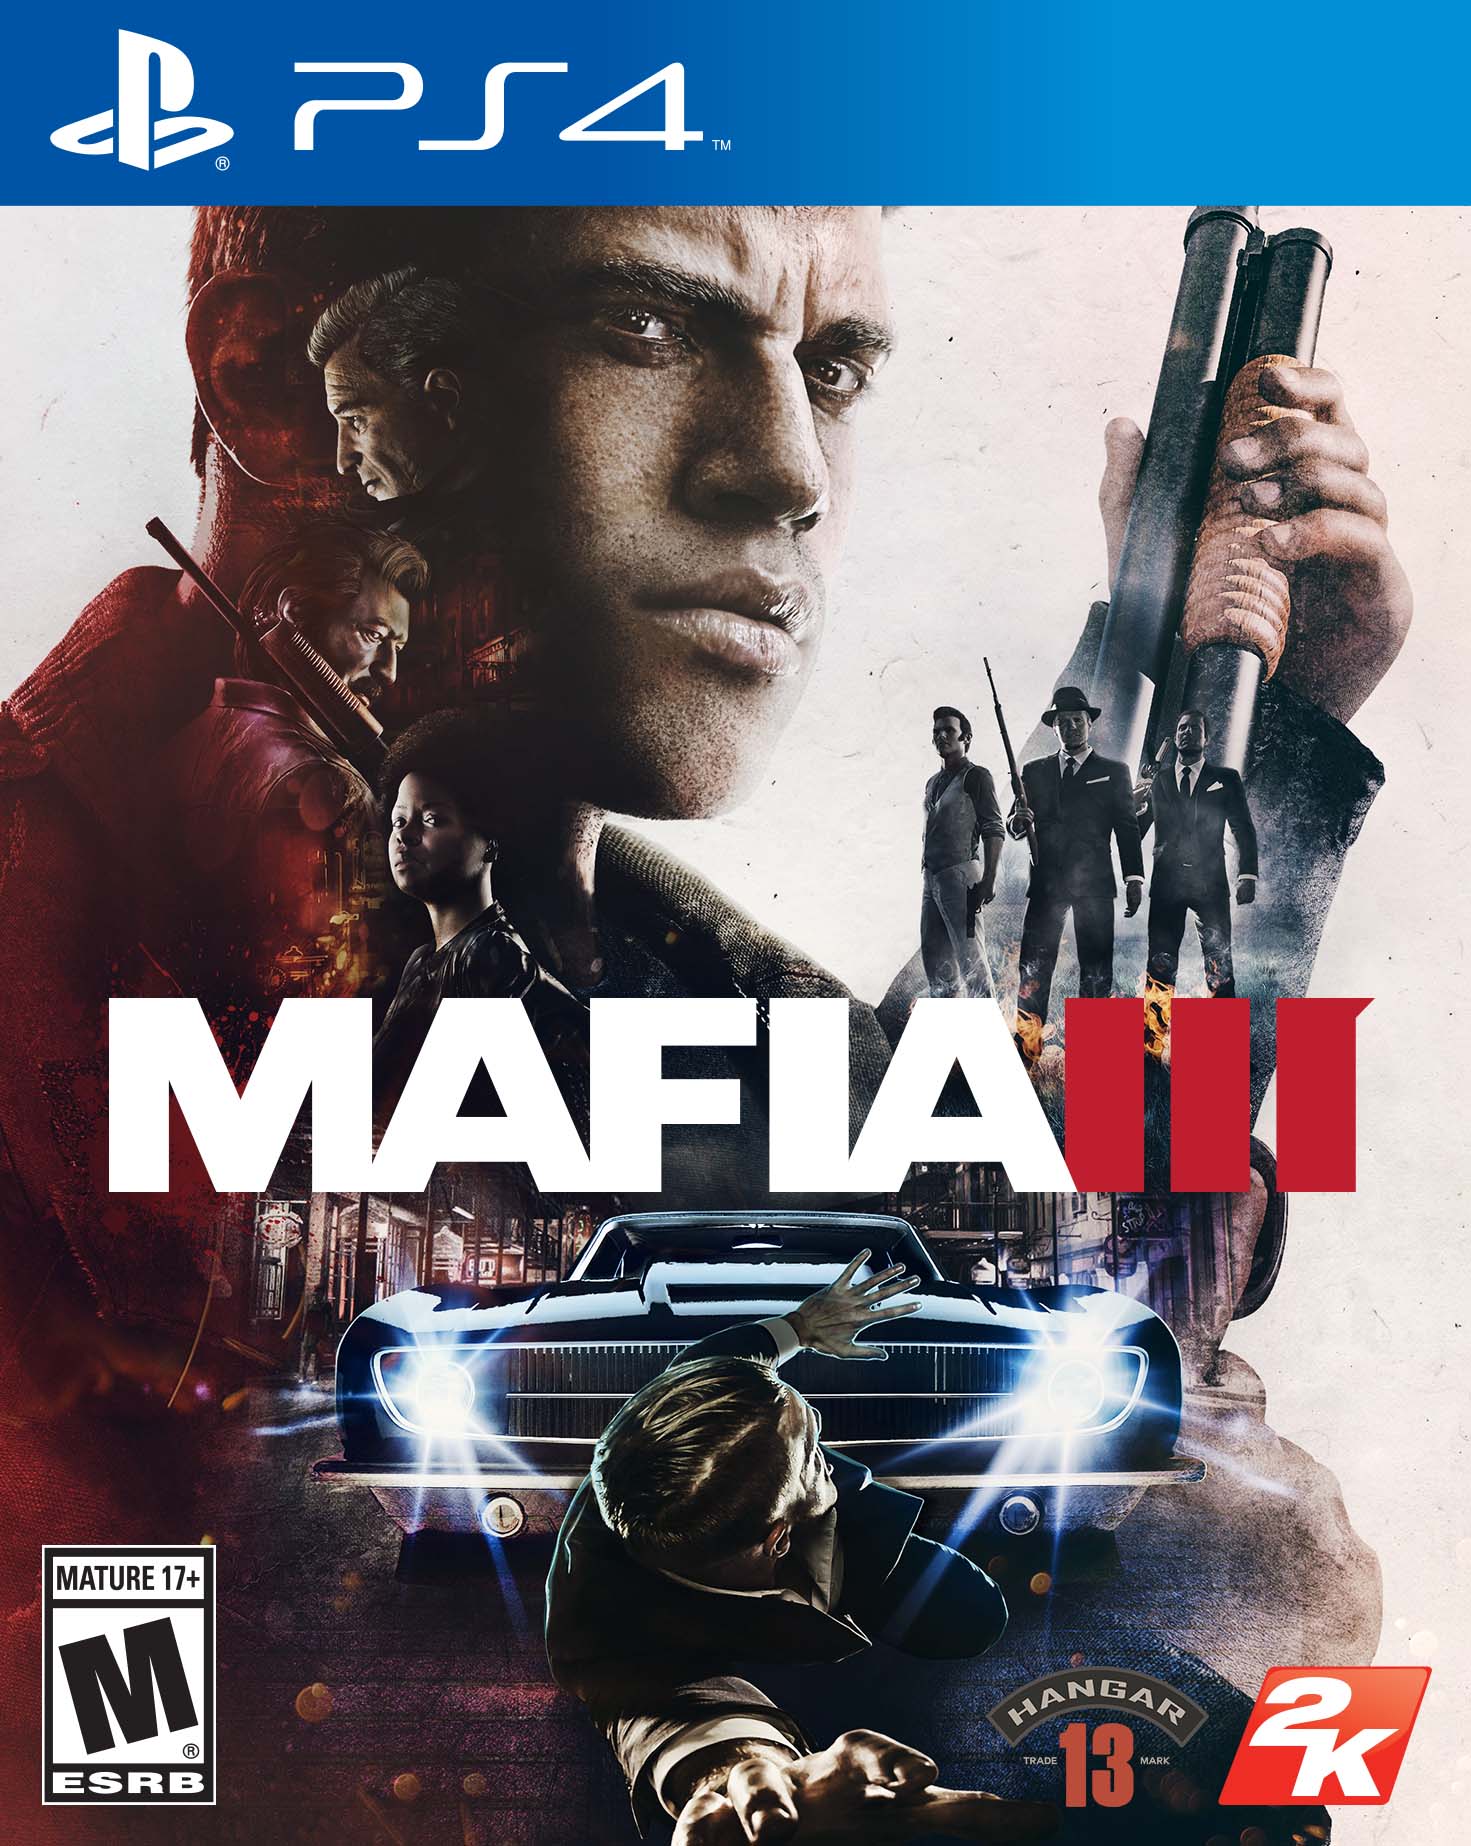 Take 2 Mafia III for PlayStation 4 (PS4)